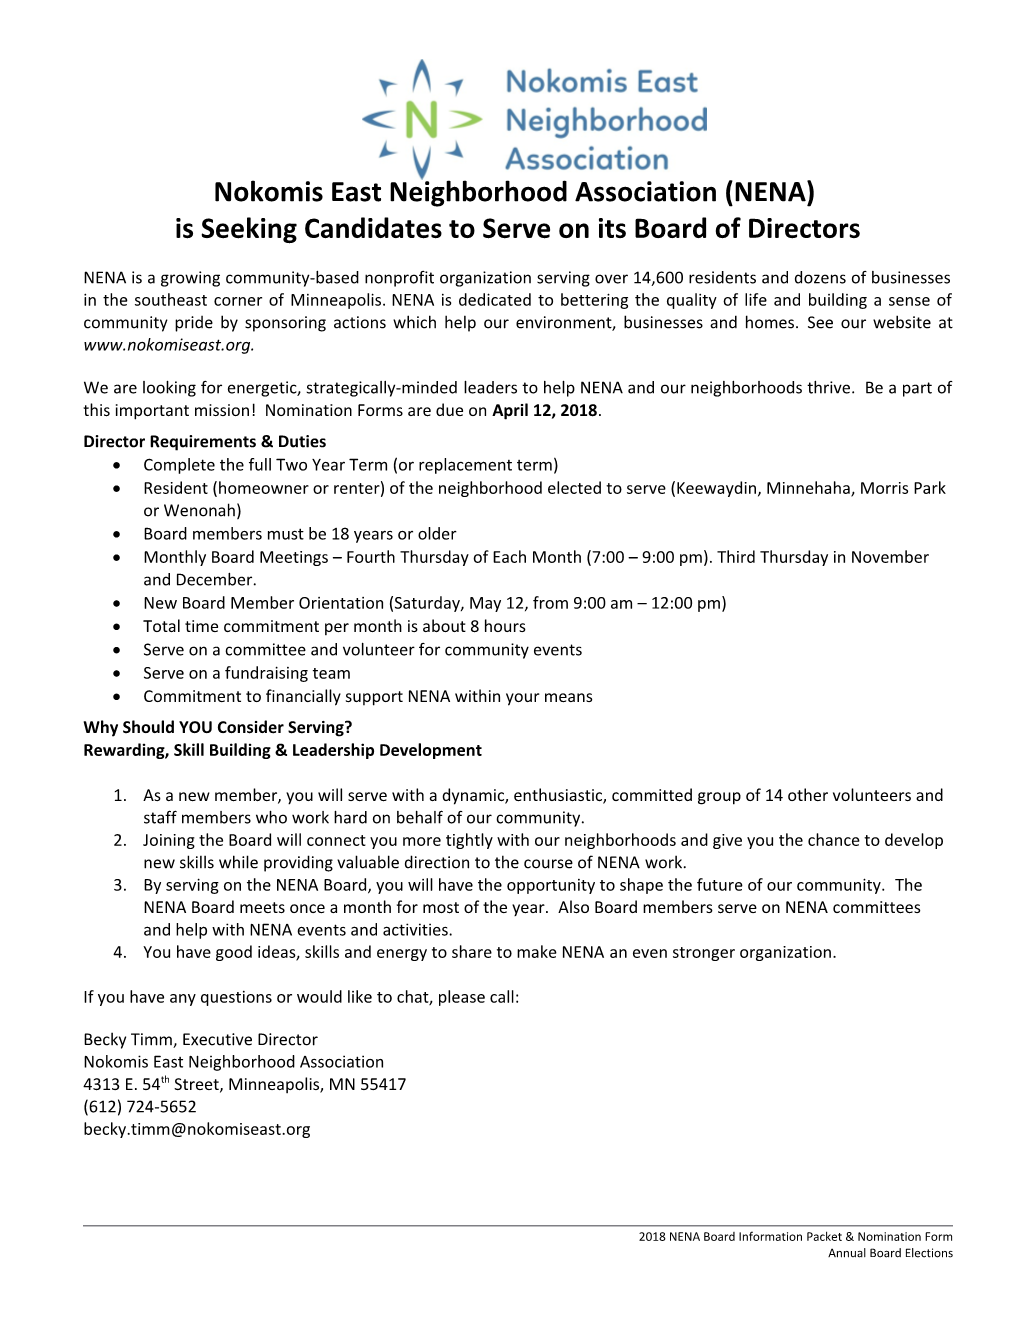 Nokomis East Neighborhood Association (NENA) Is Seeking Candidates to Serve on Its Board